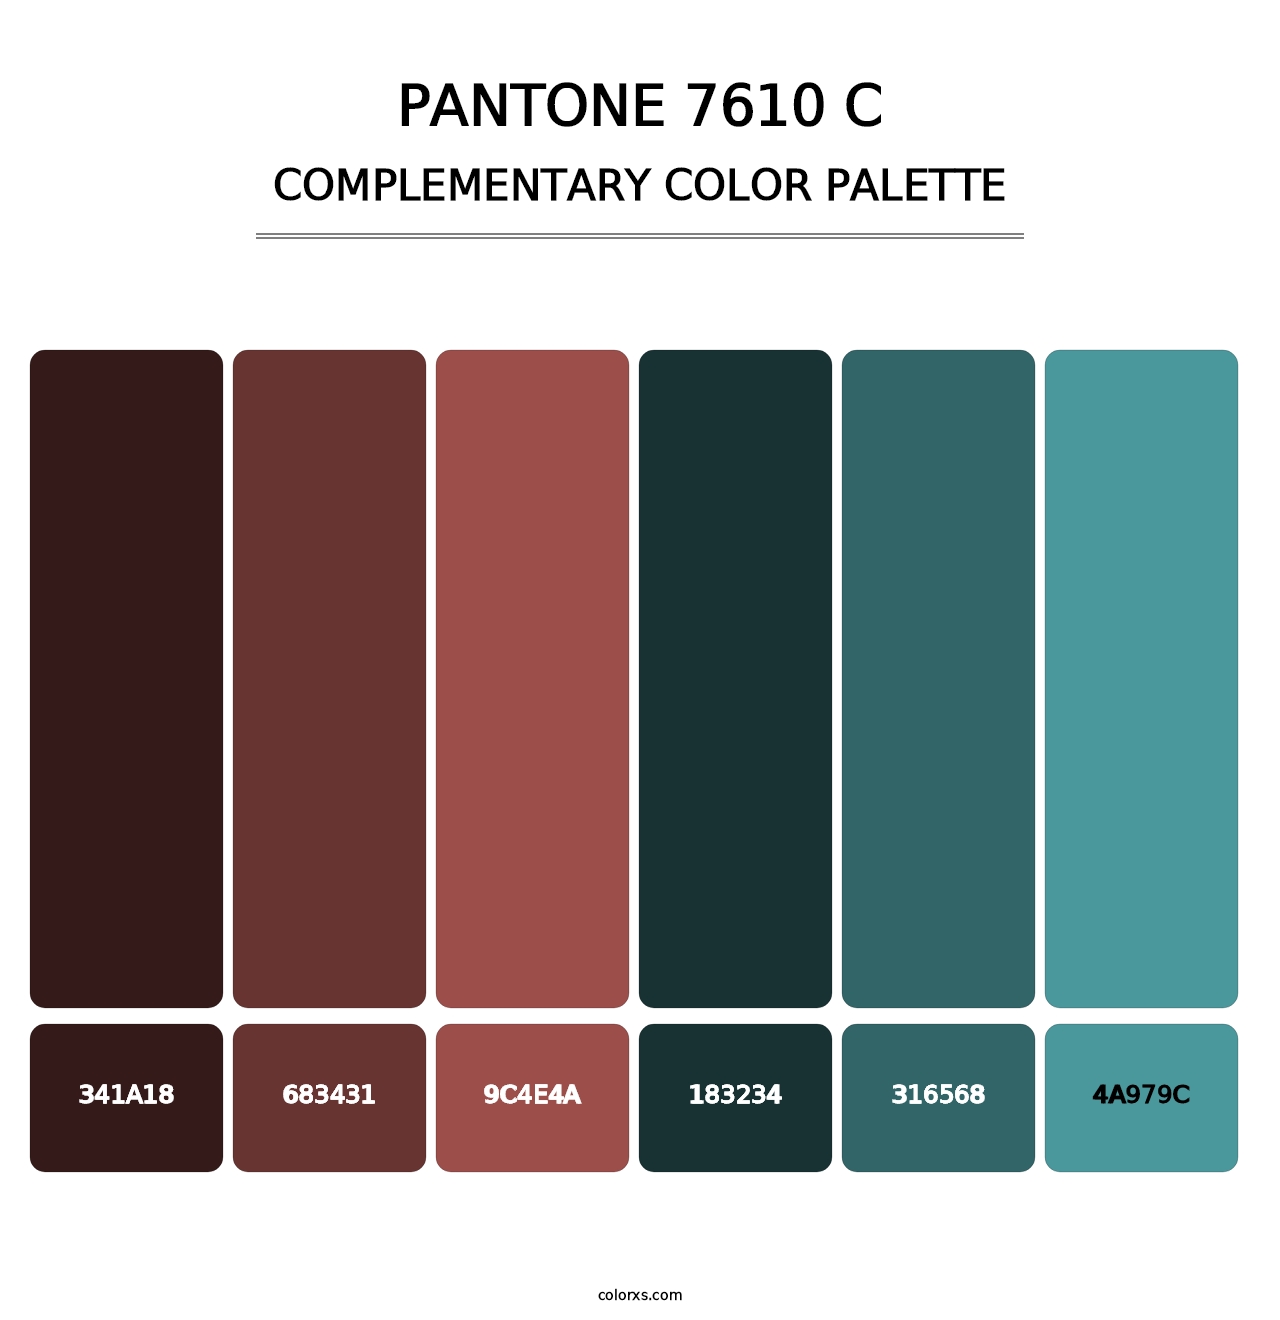 PANTONE 7610 C - Complementary Color Palette